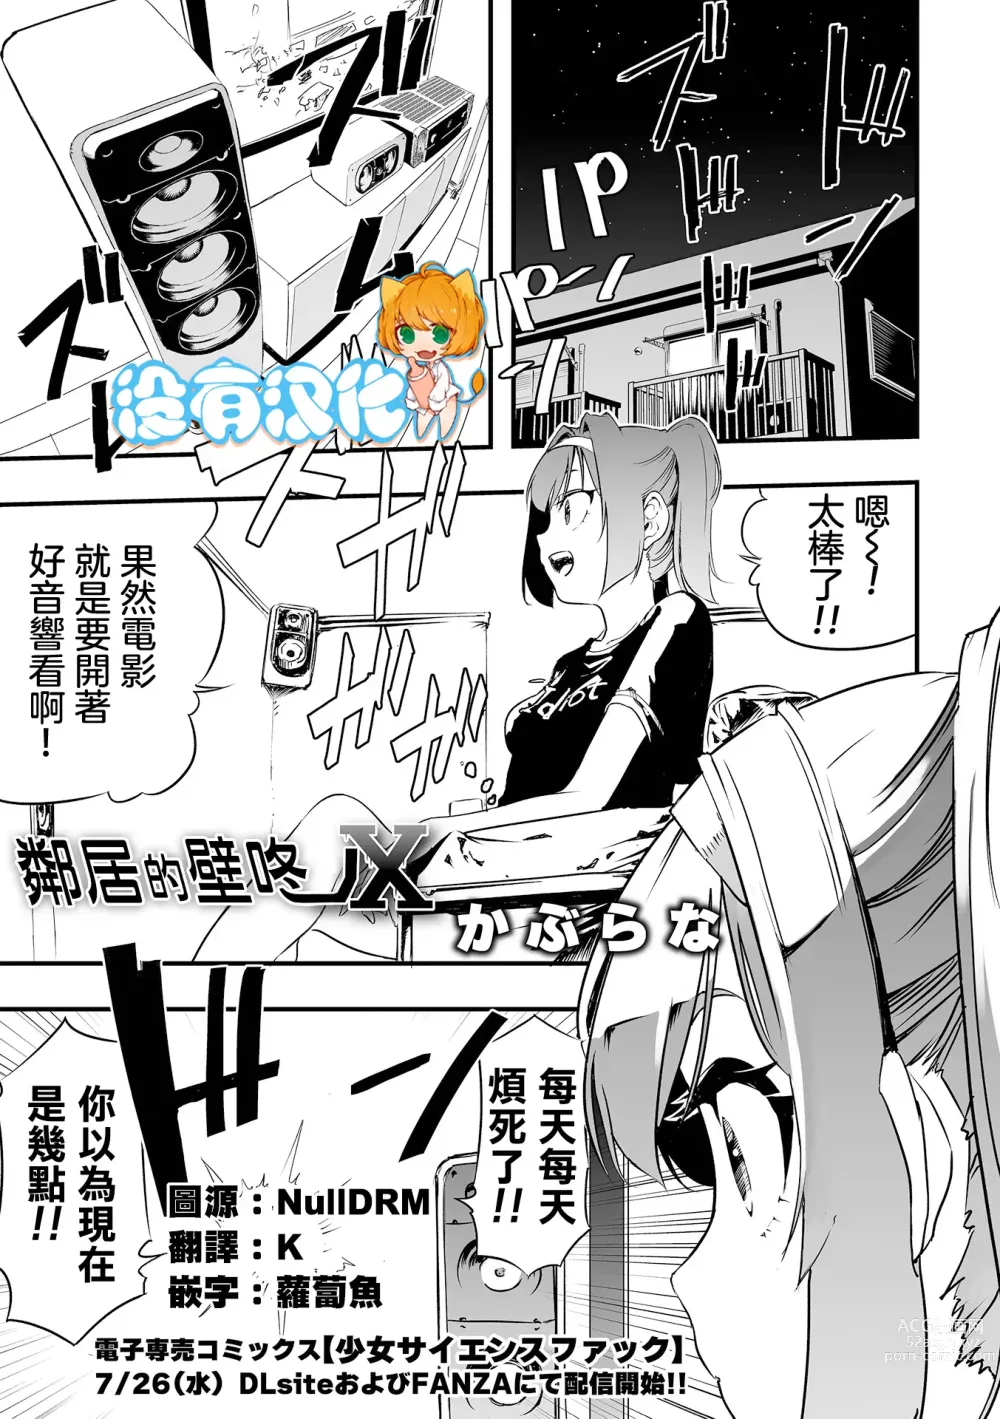 Page 1 of manga 鄰居的壁咚X